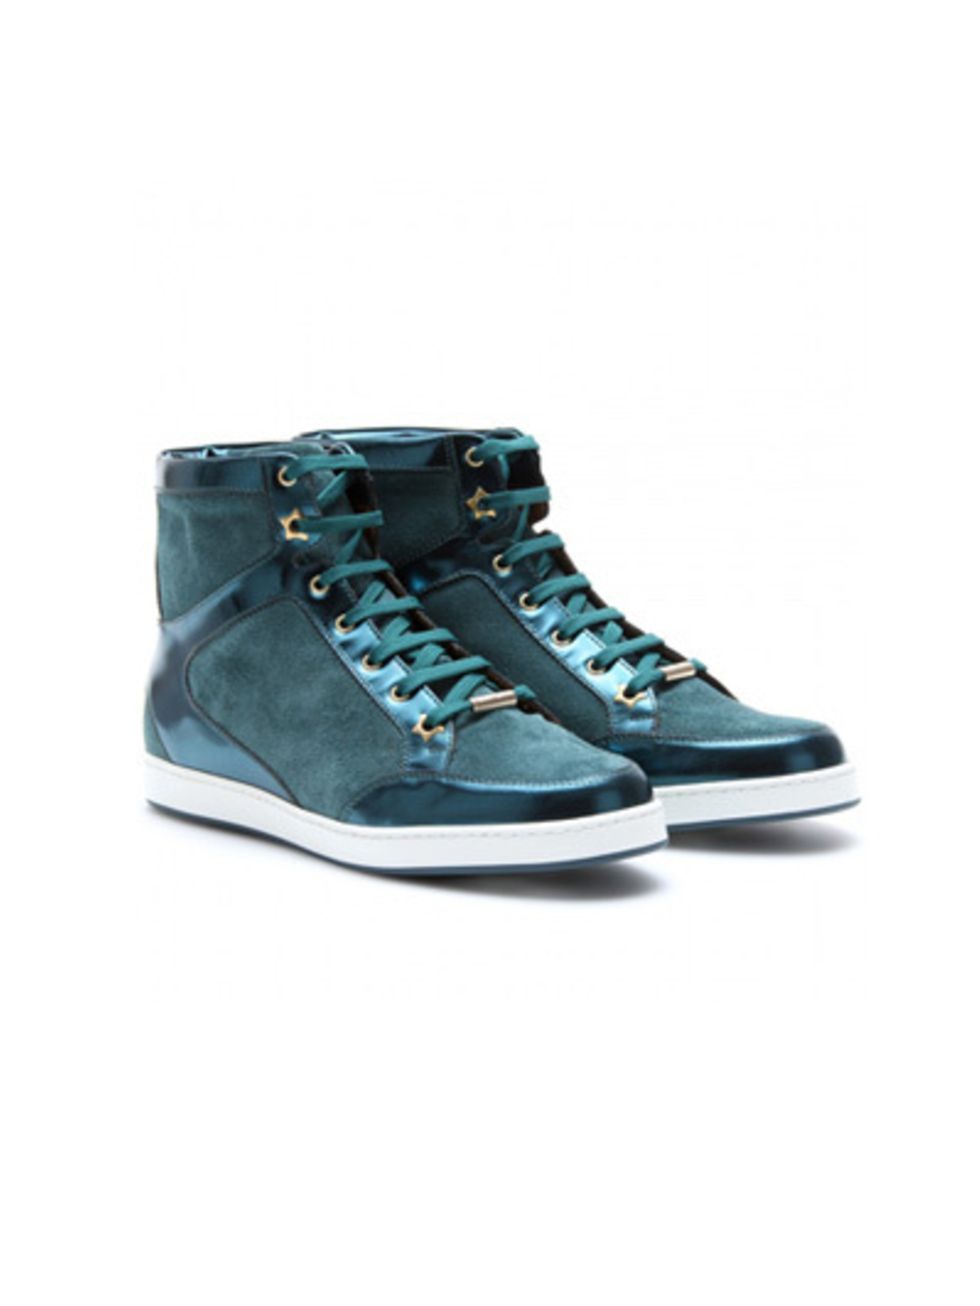 Footwear, Blue, Product, Shoe, White, Teal, Aqua, Turquoise, Black, Grey, 